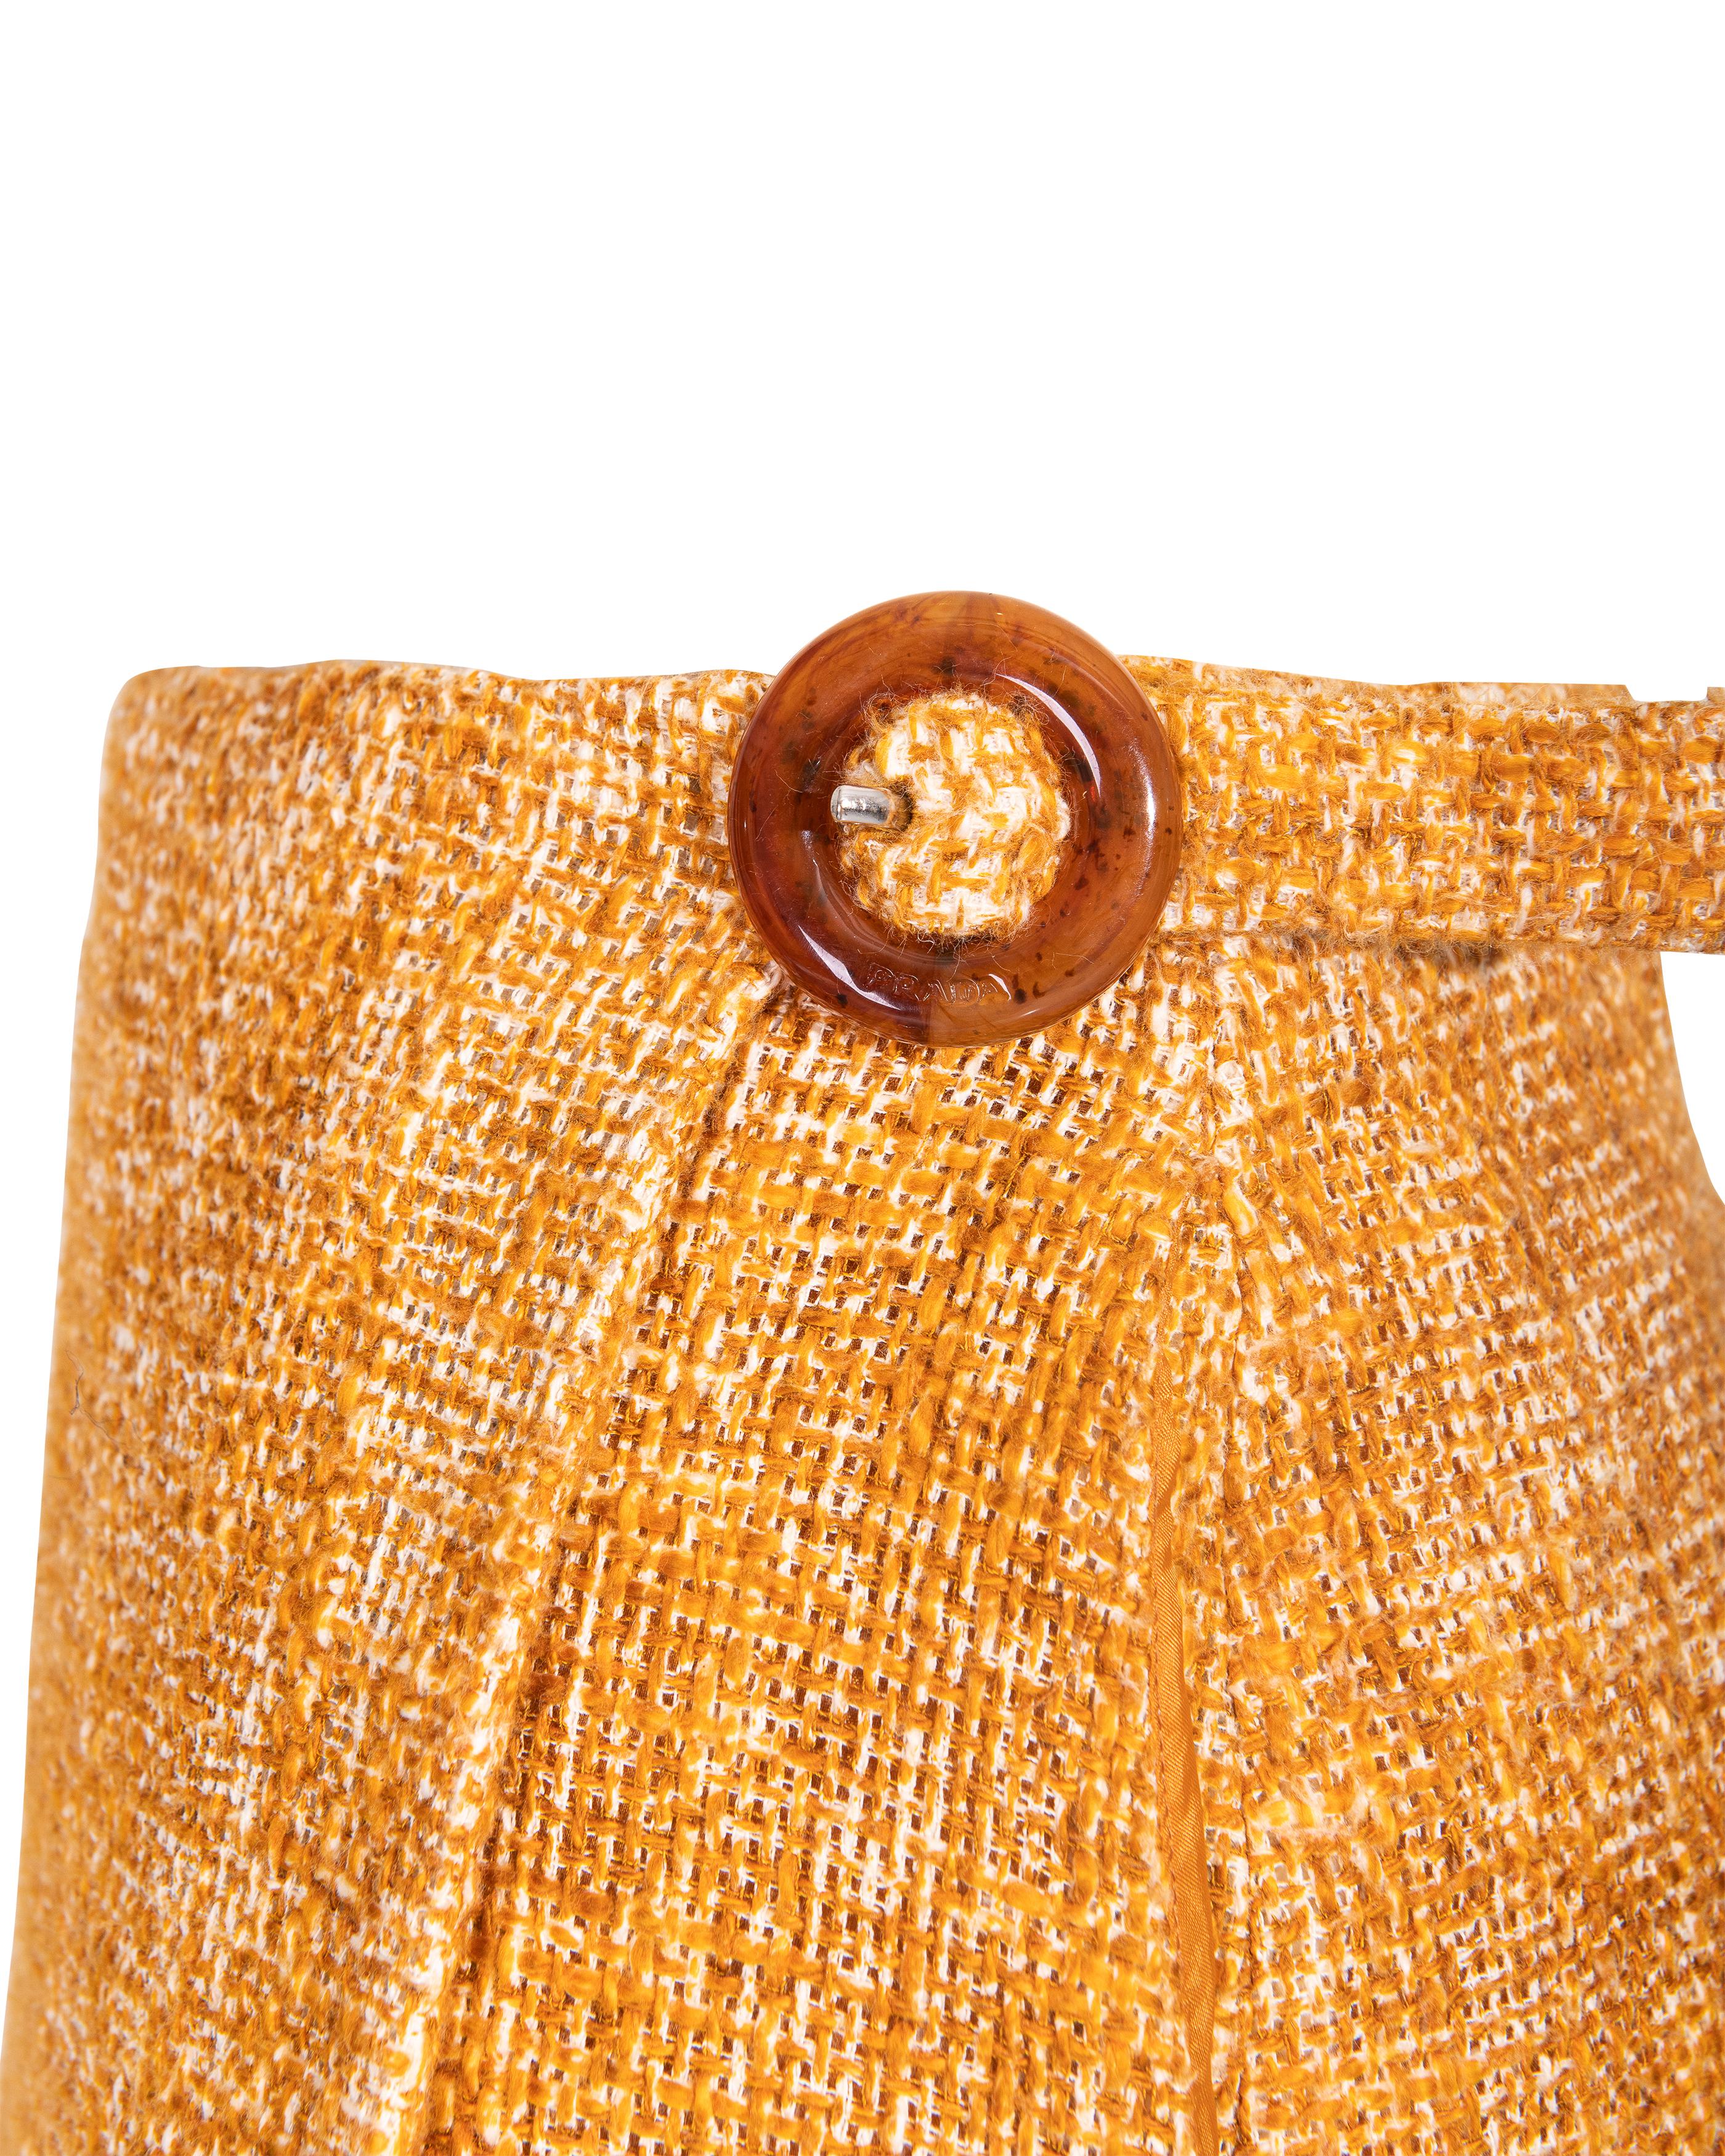 S/S 1996 Prada by Miuccia Prada Orange Tweed Skirt Set 4